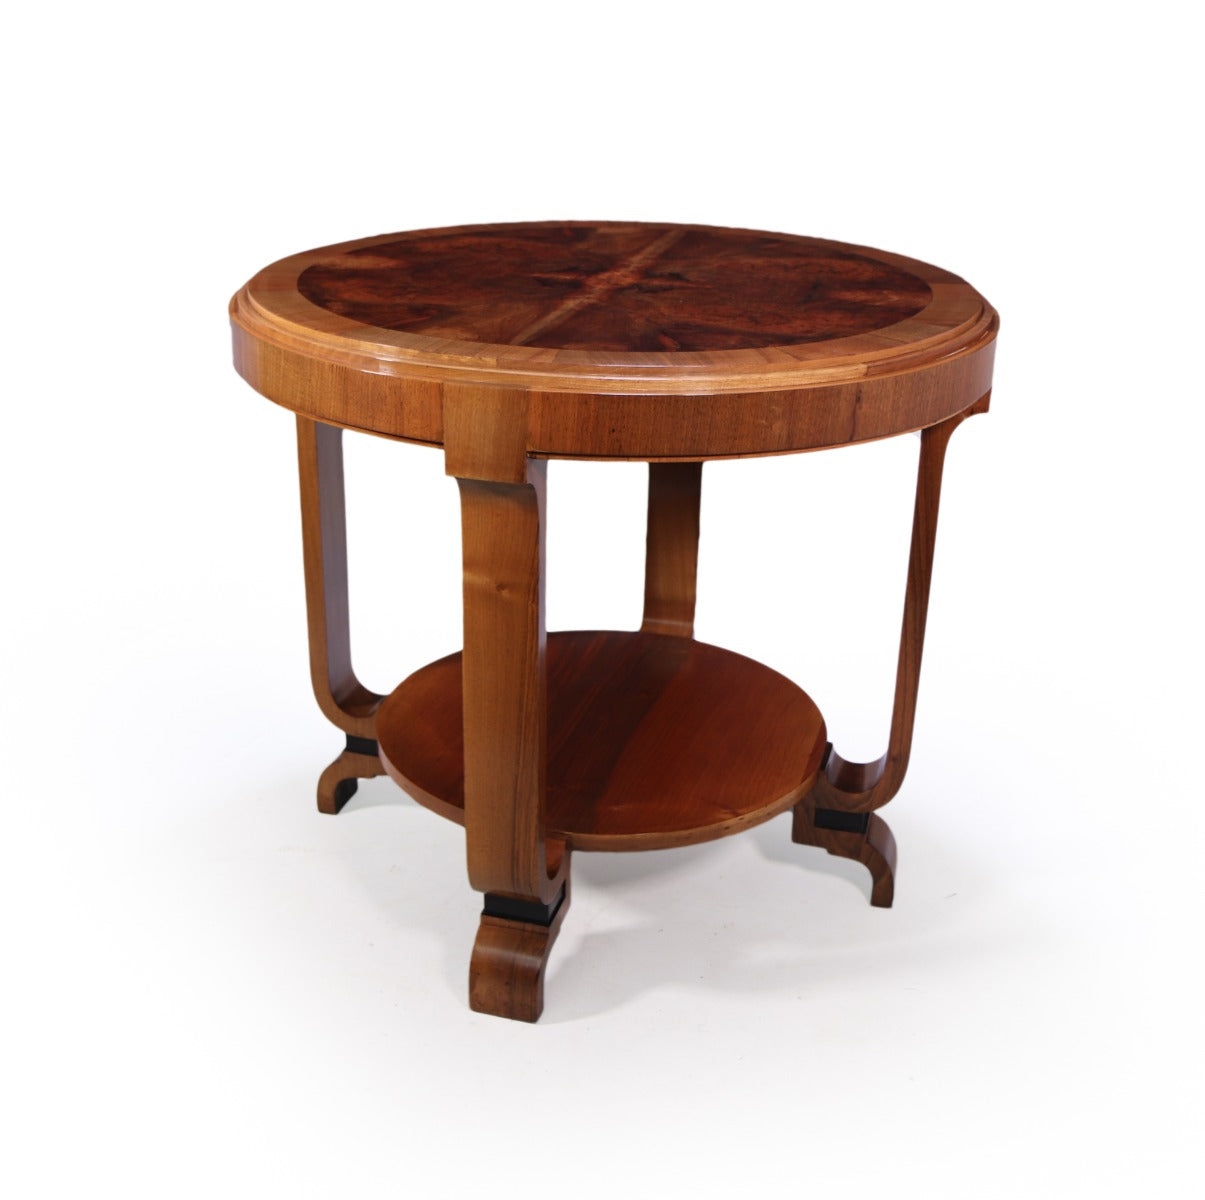 Original Art Deco Center Table in Walnut – The Furniture Rooms